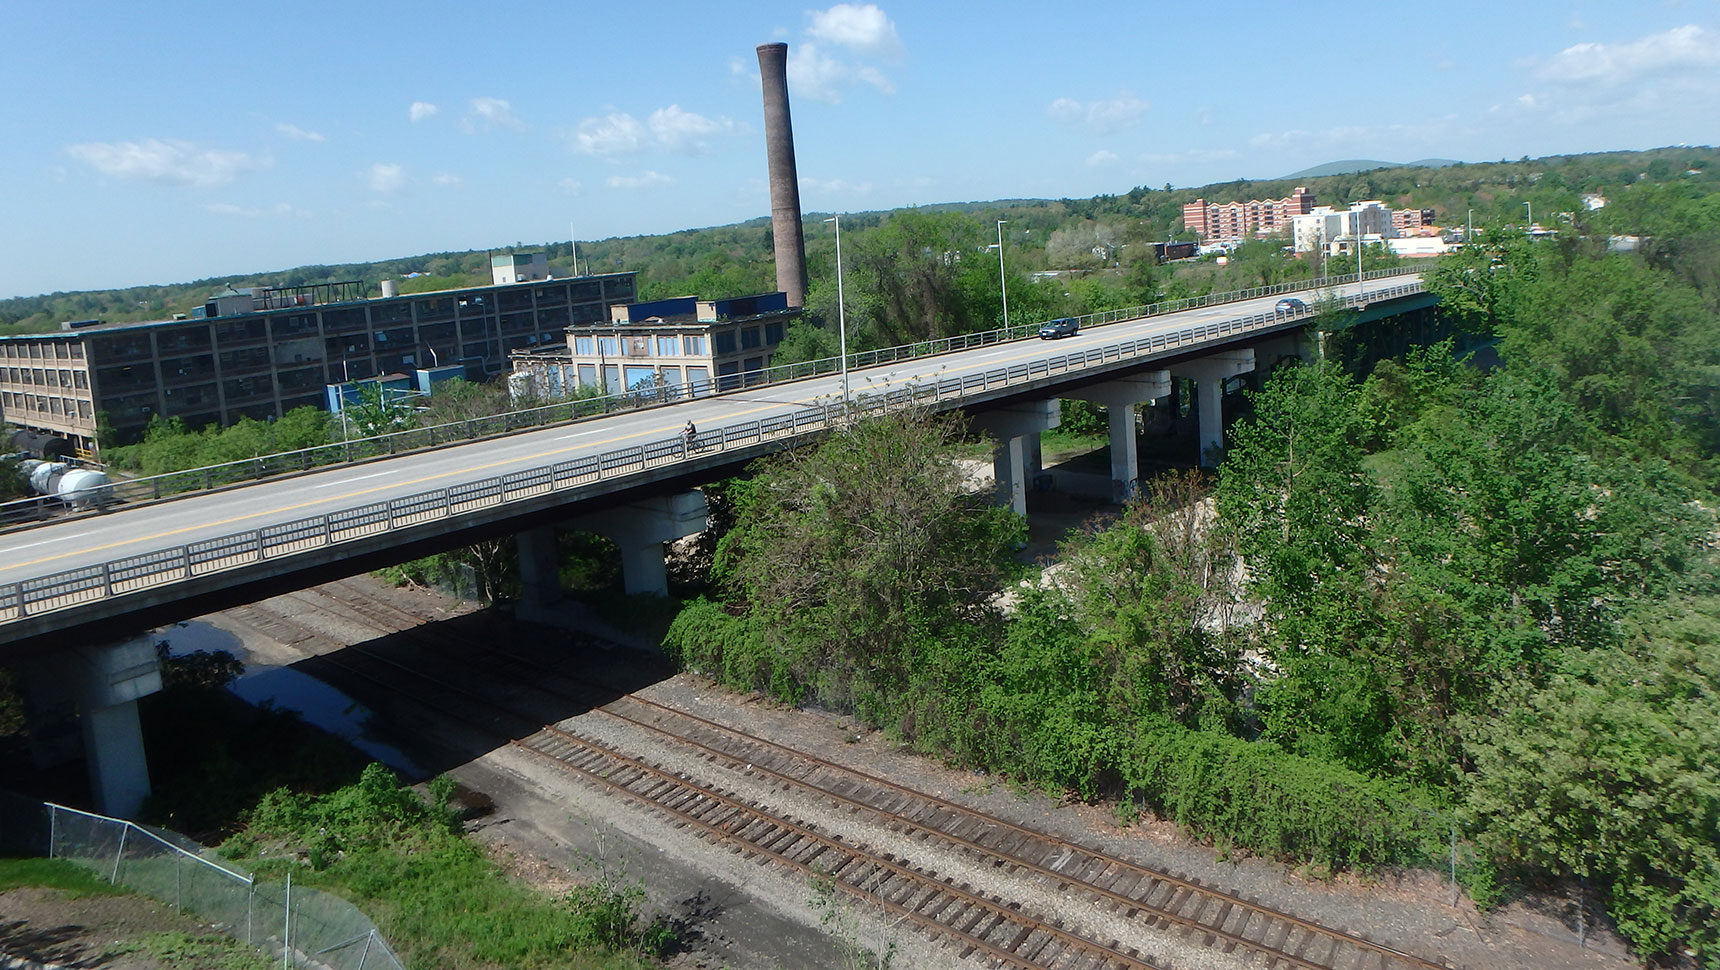 Size view of queen city bridge over the railroad tracks